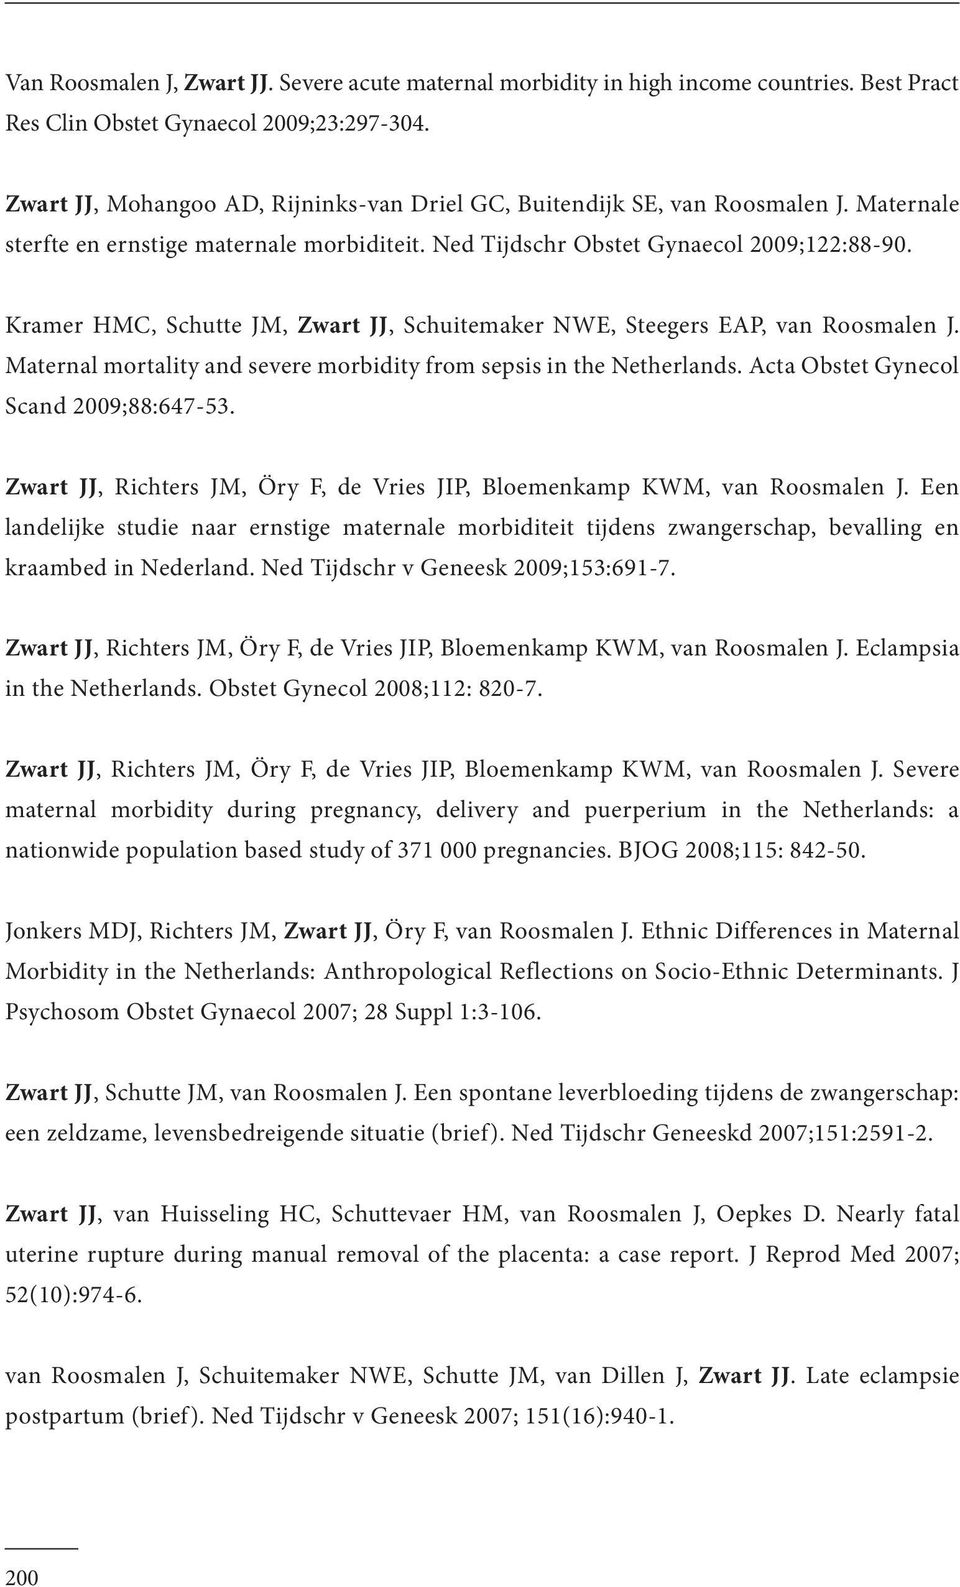 Kramer HMC, Schutte JM, Zwart JJ, Schuitemaker NWE, Steegers EAP, van Roosmalen J. Maternal mortality and severe morbidity from sepsis in the Netherlands. Acta Obstet Gynecol Scand 2009;88:647-53.